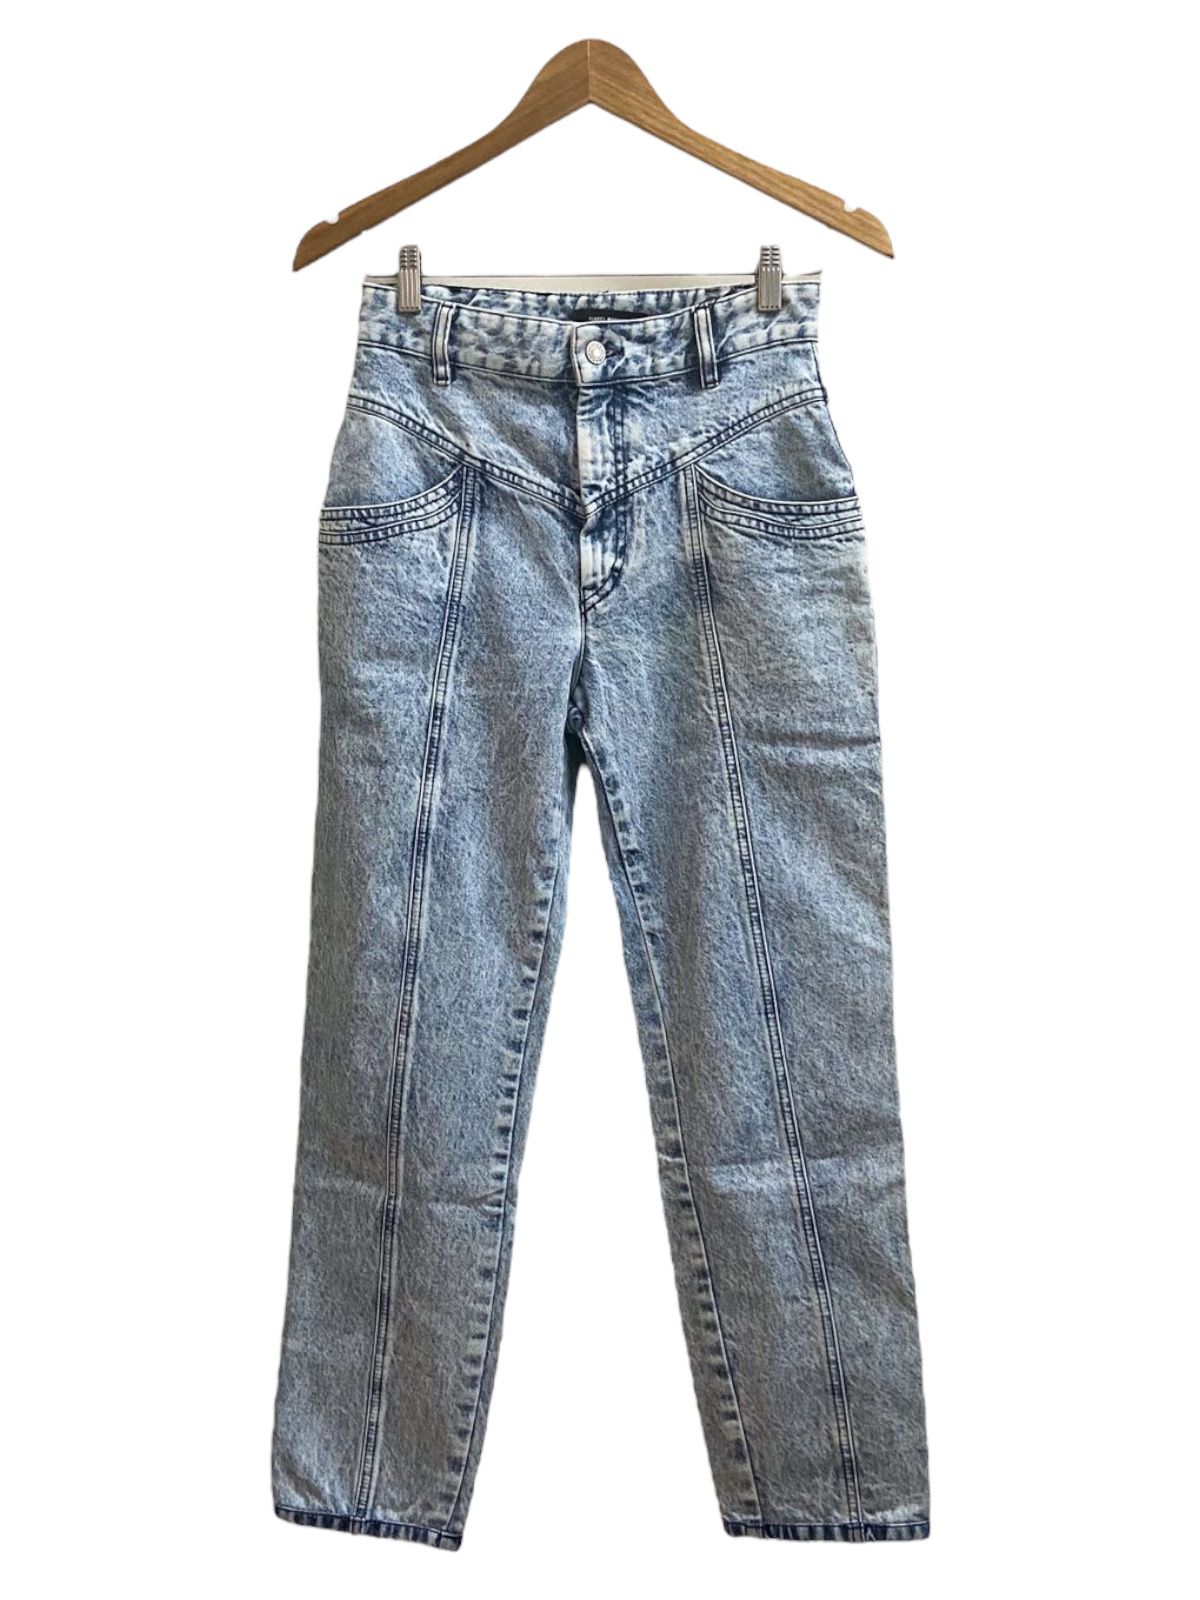 Calça Jeans Azul Isabel Marant Tamanho 34